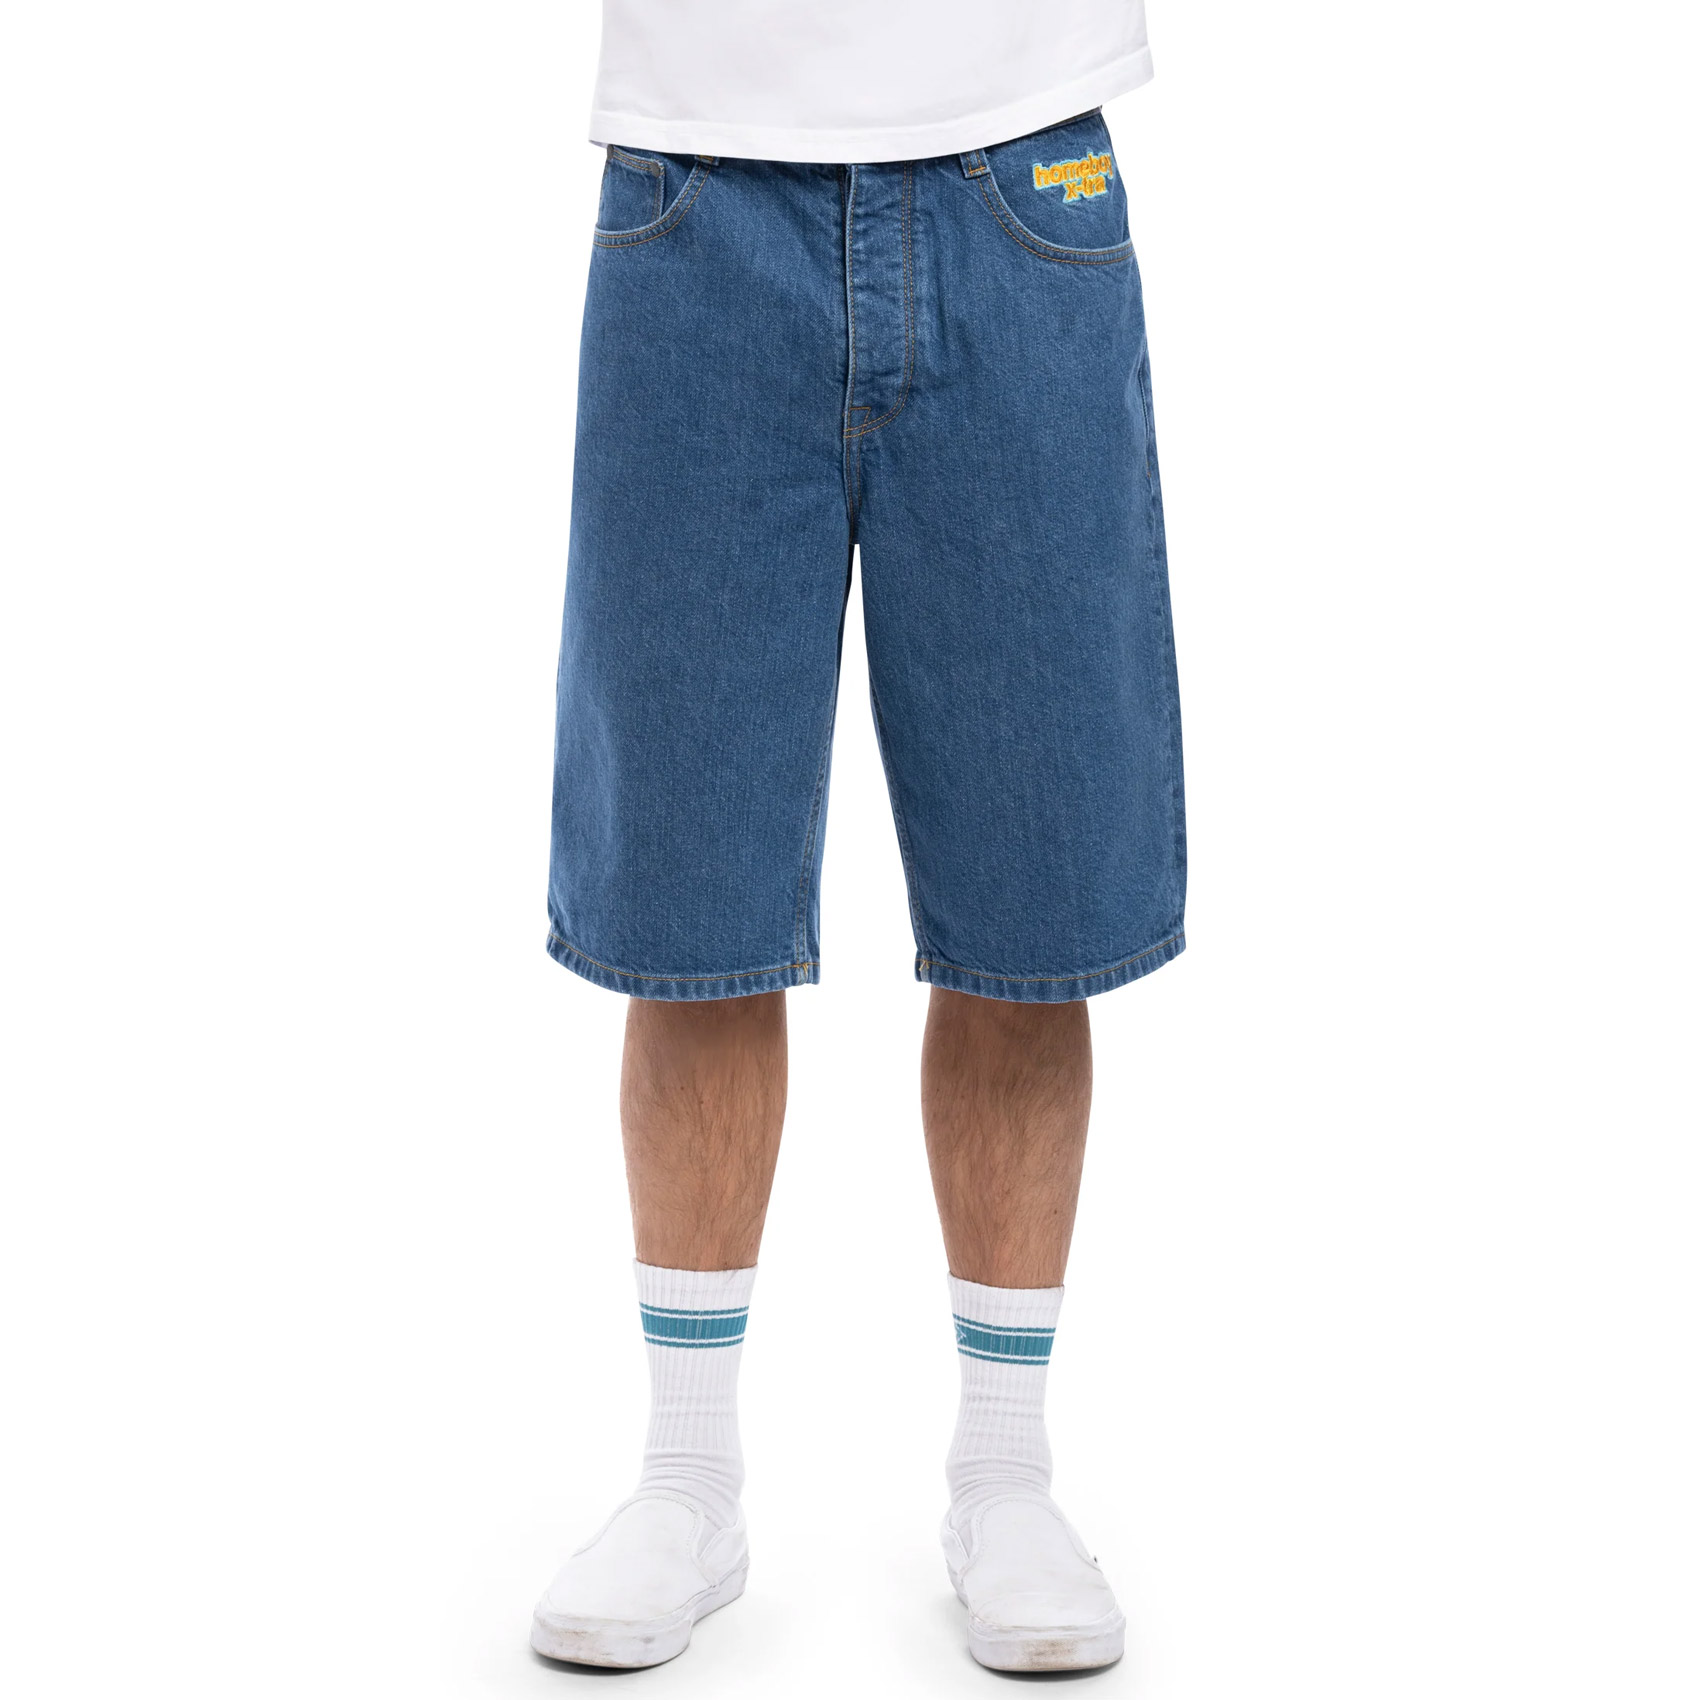 Homeboy Shorts x-tra Baggy Denim (washed blue)